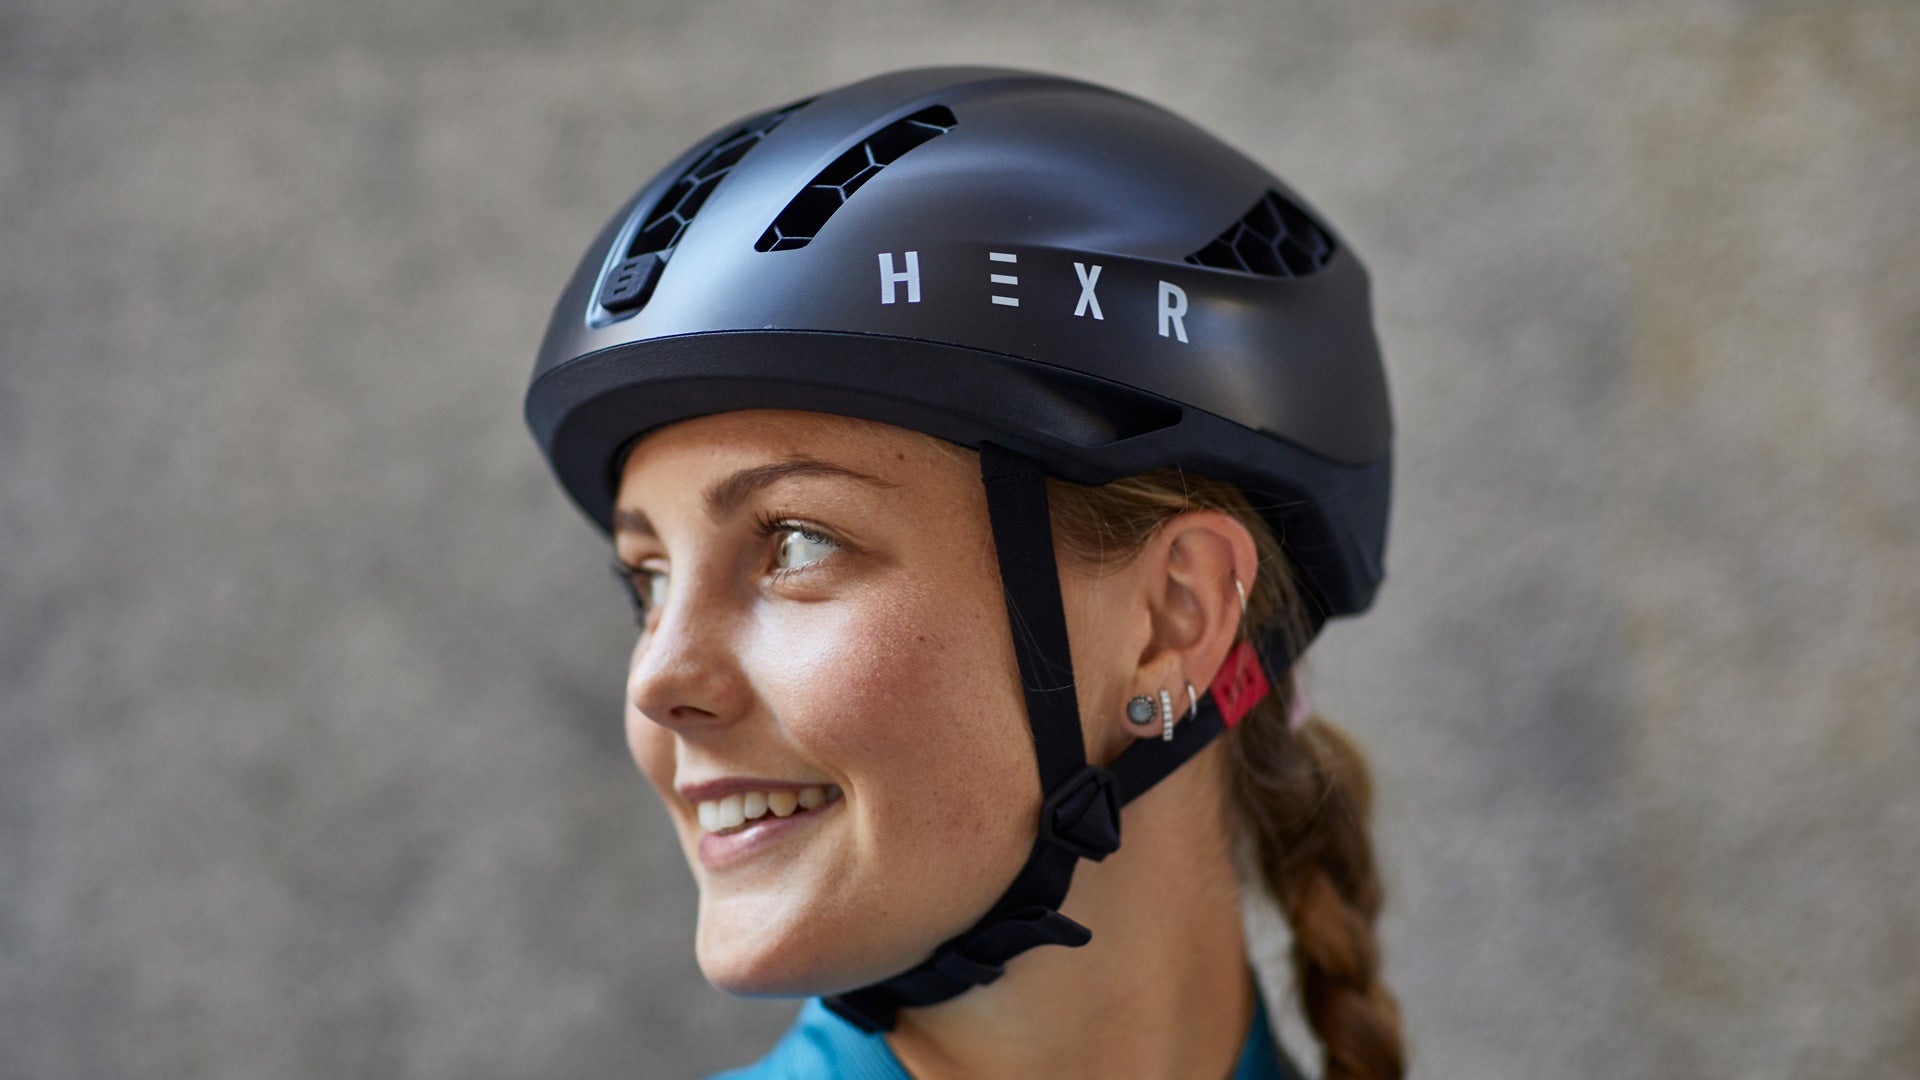 Lady wearing a HEXR Helmet with a Black Shell